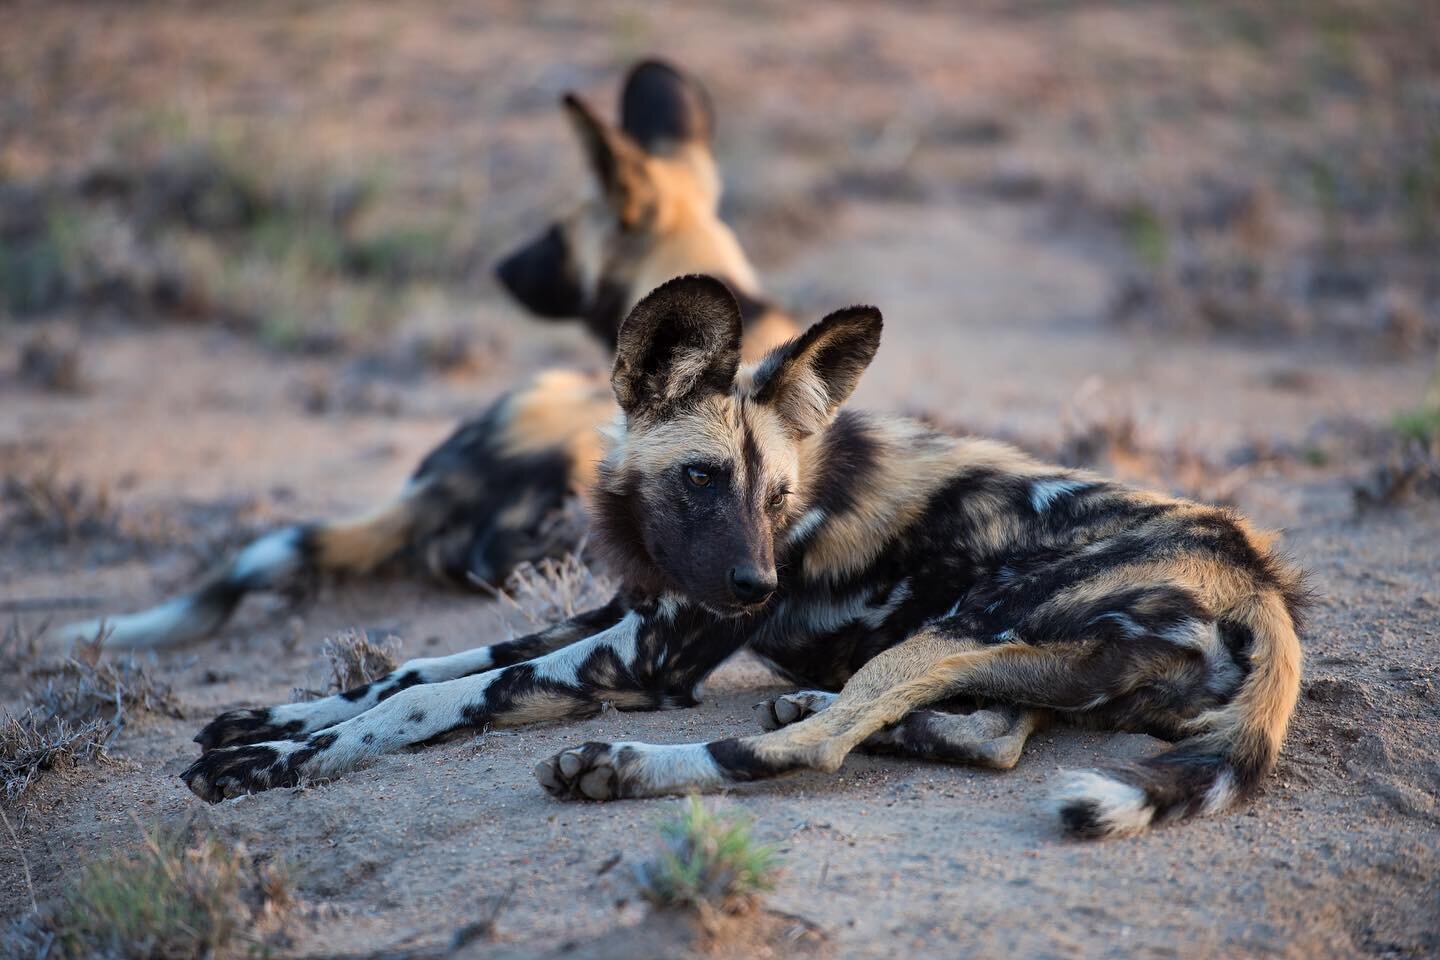 Today is #internationaldog day so we are celebrating Africa&rsquo;s Wild Dog!
.
.
#wilddog #paintedwolf #wildatheartjourneys #safari #conservation #endangered